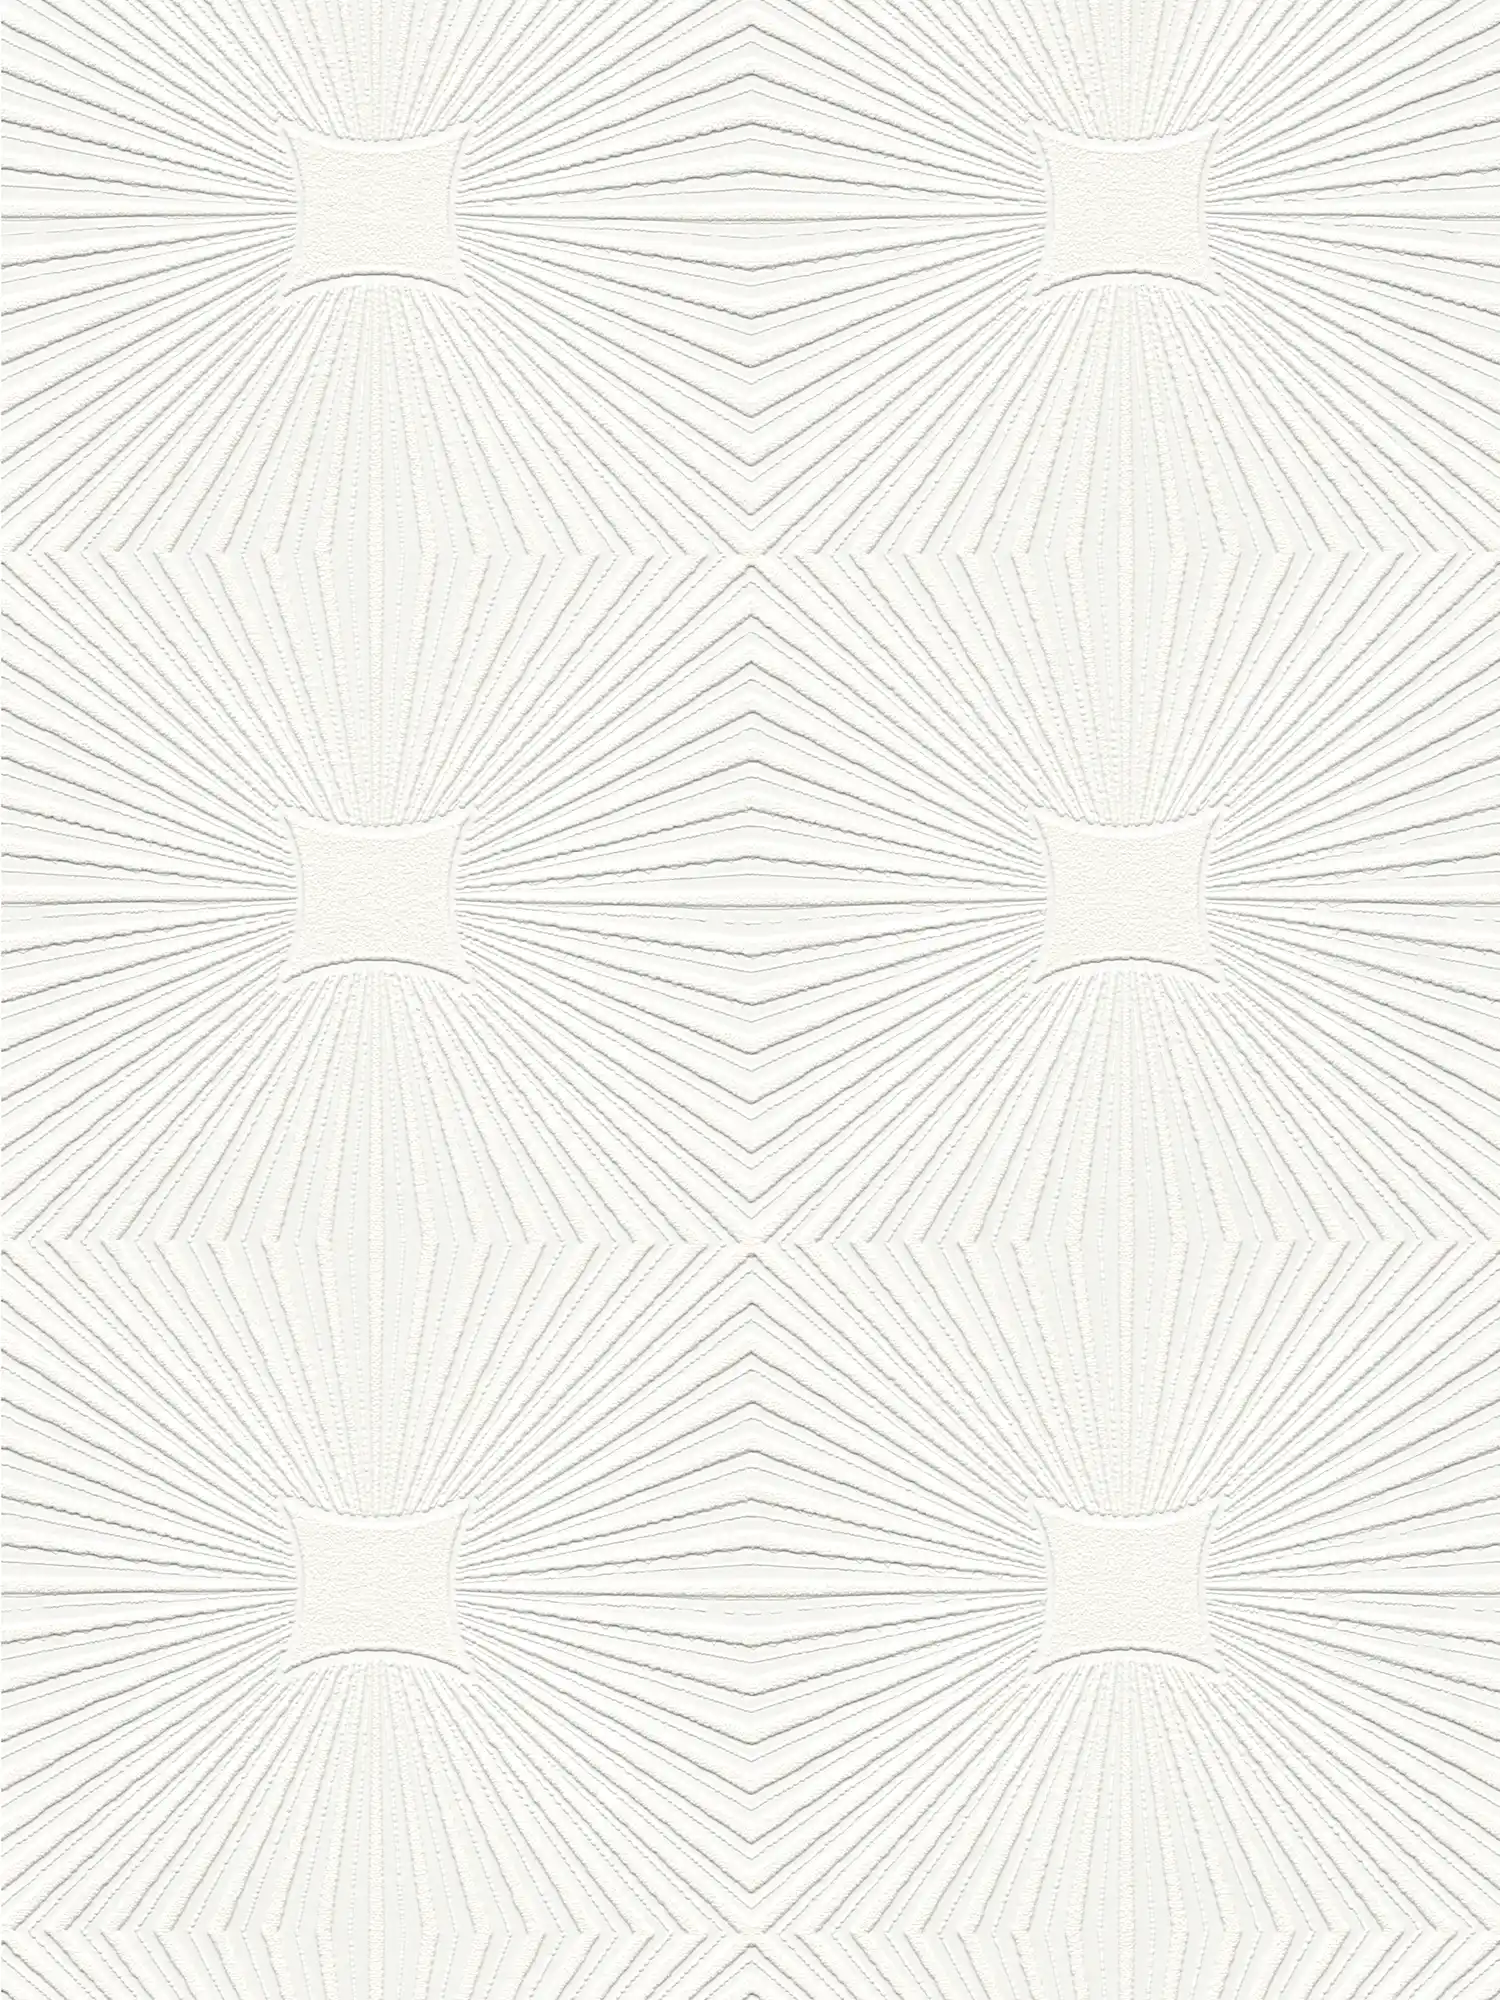 White wallpaper with 3D texture design retro pattern
